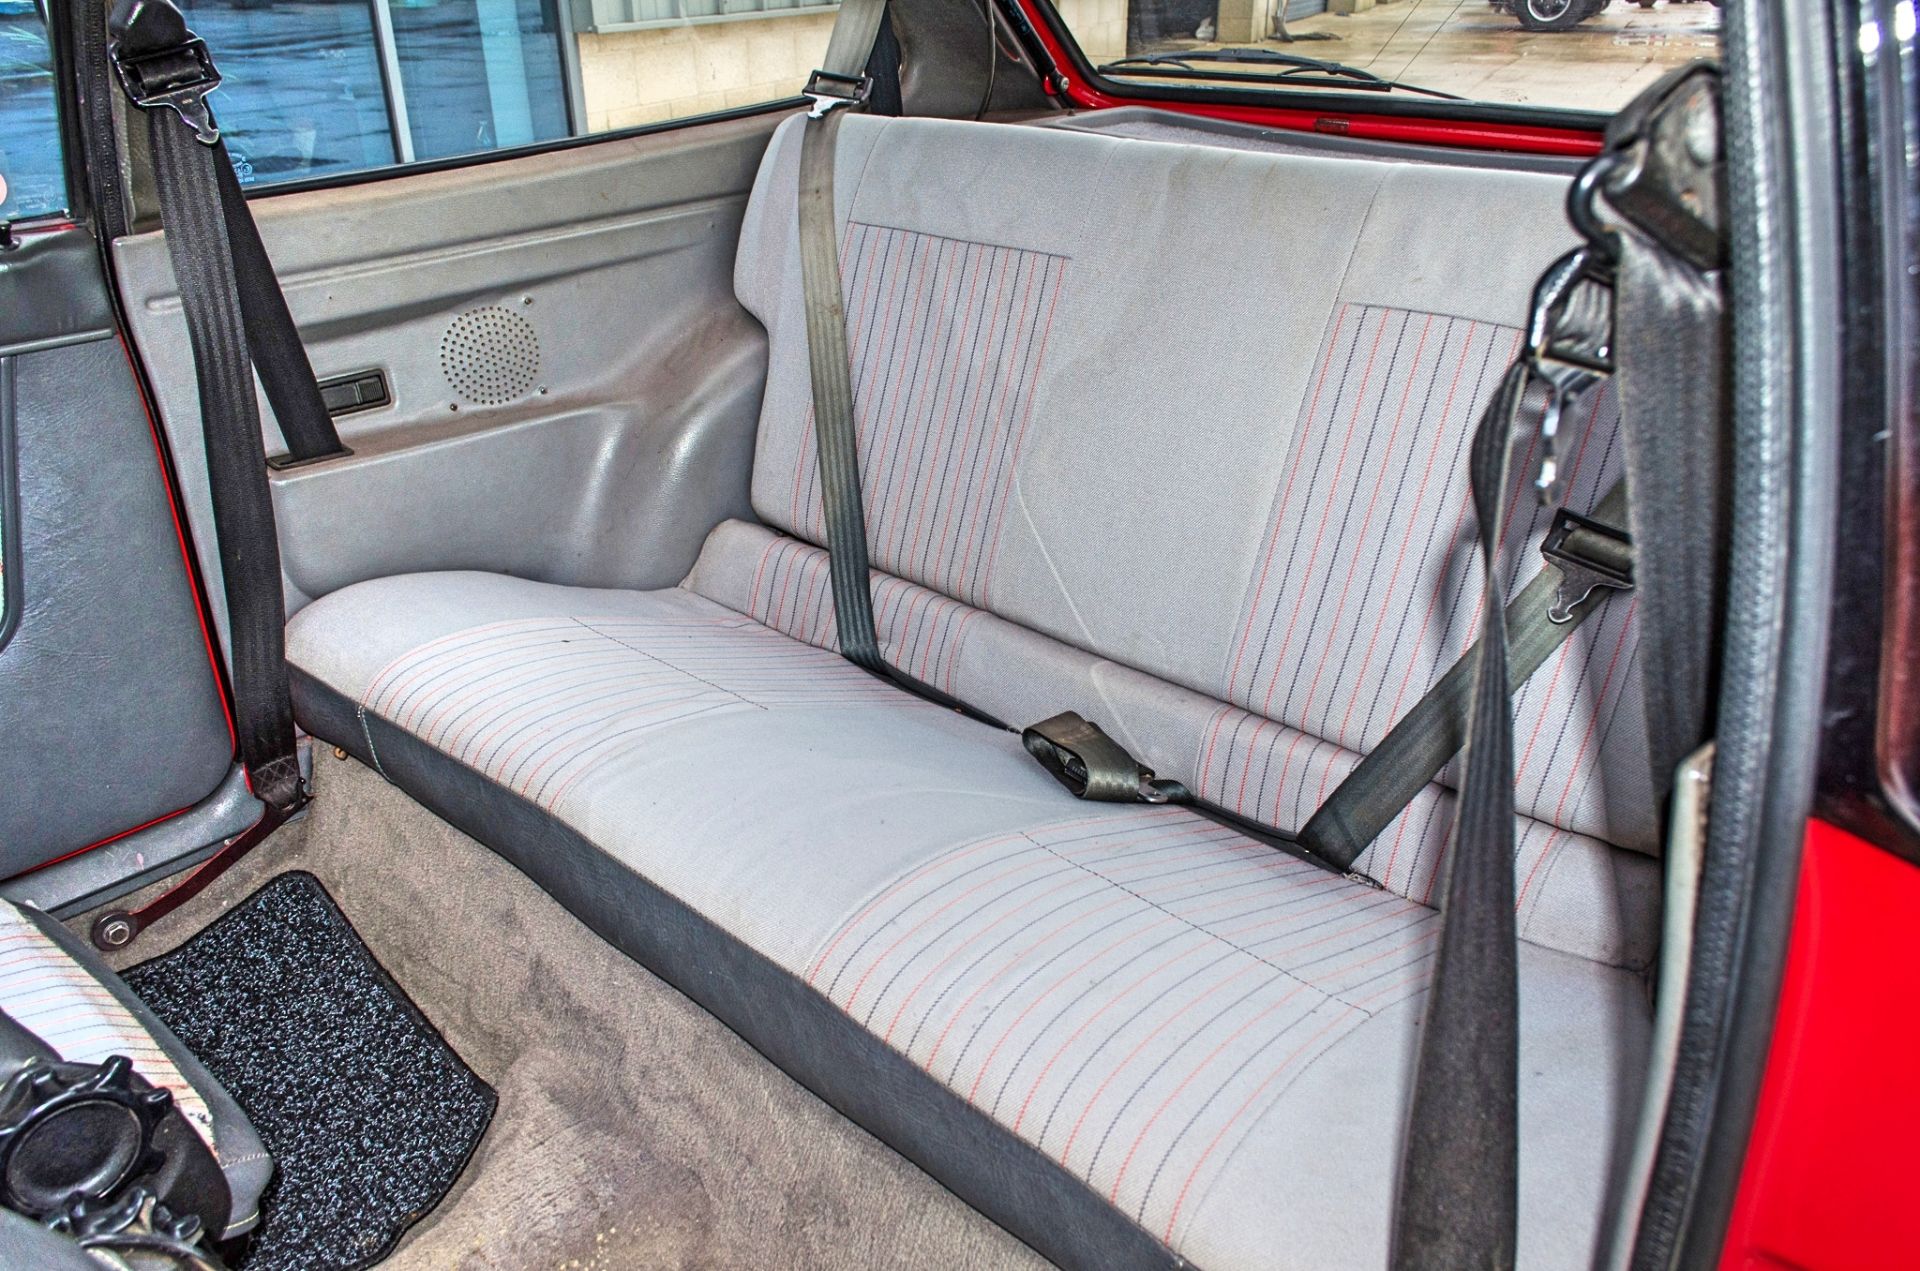 1983 Ford Fiesta XR2 1600cc 3 door hatchback - Image 32 of 47